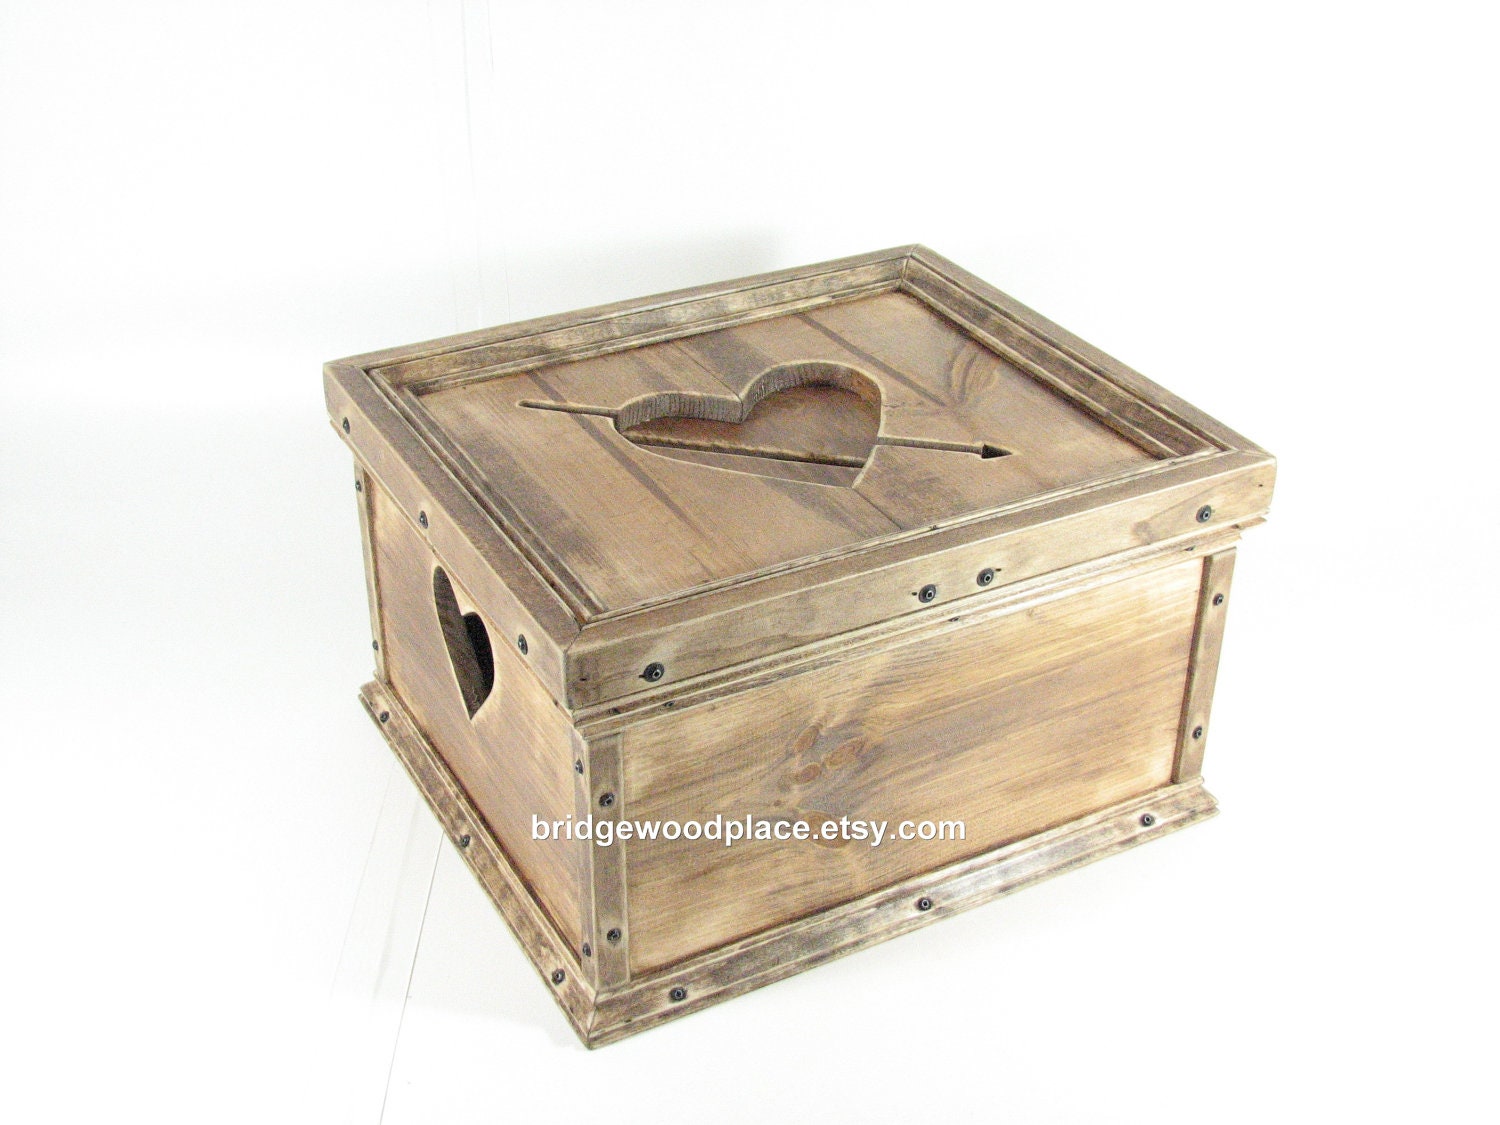 Wedding Card Box Wood Hope Chest Wooden Keepsake Memory Box Available in 7 Finishes - BridgewoodPlace